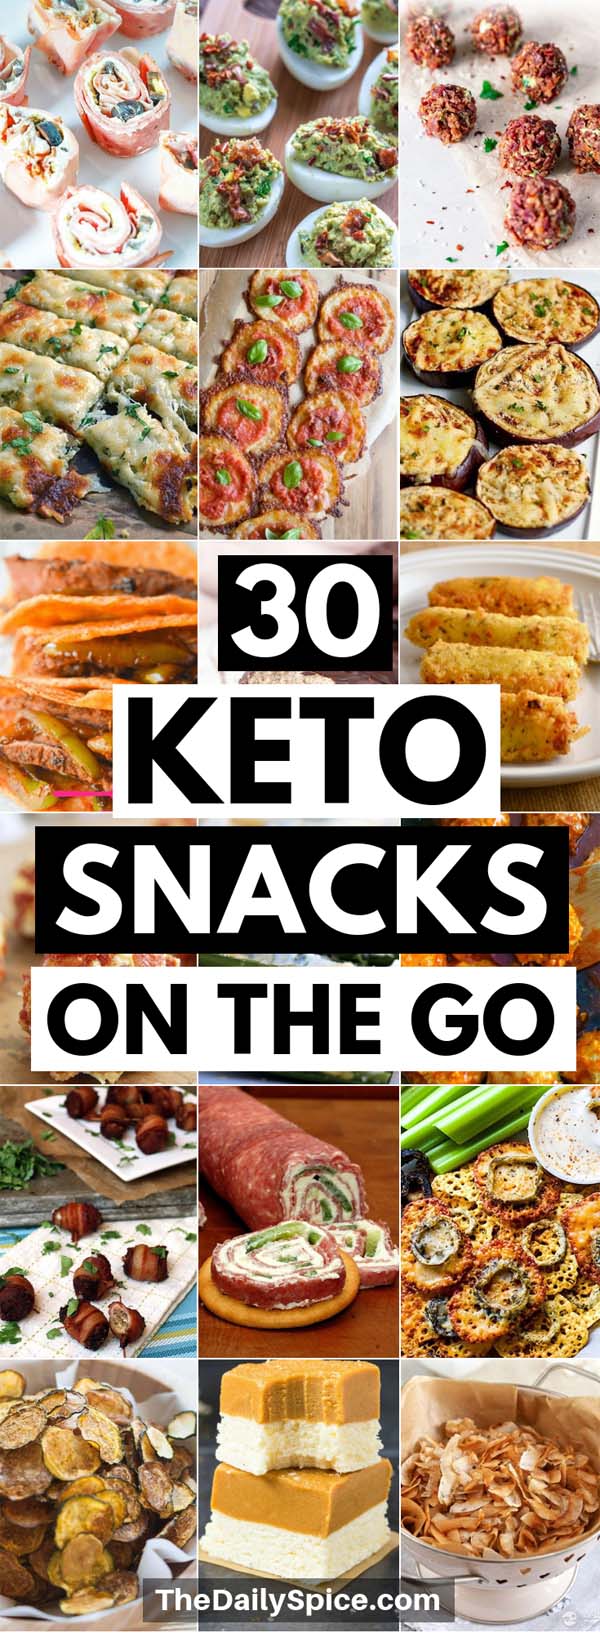 Keto snacks on the go